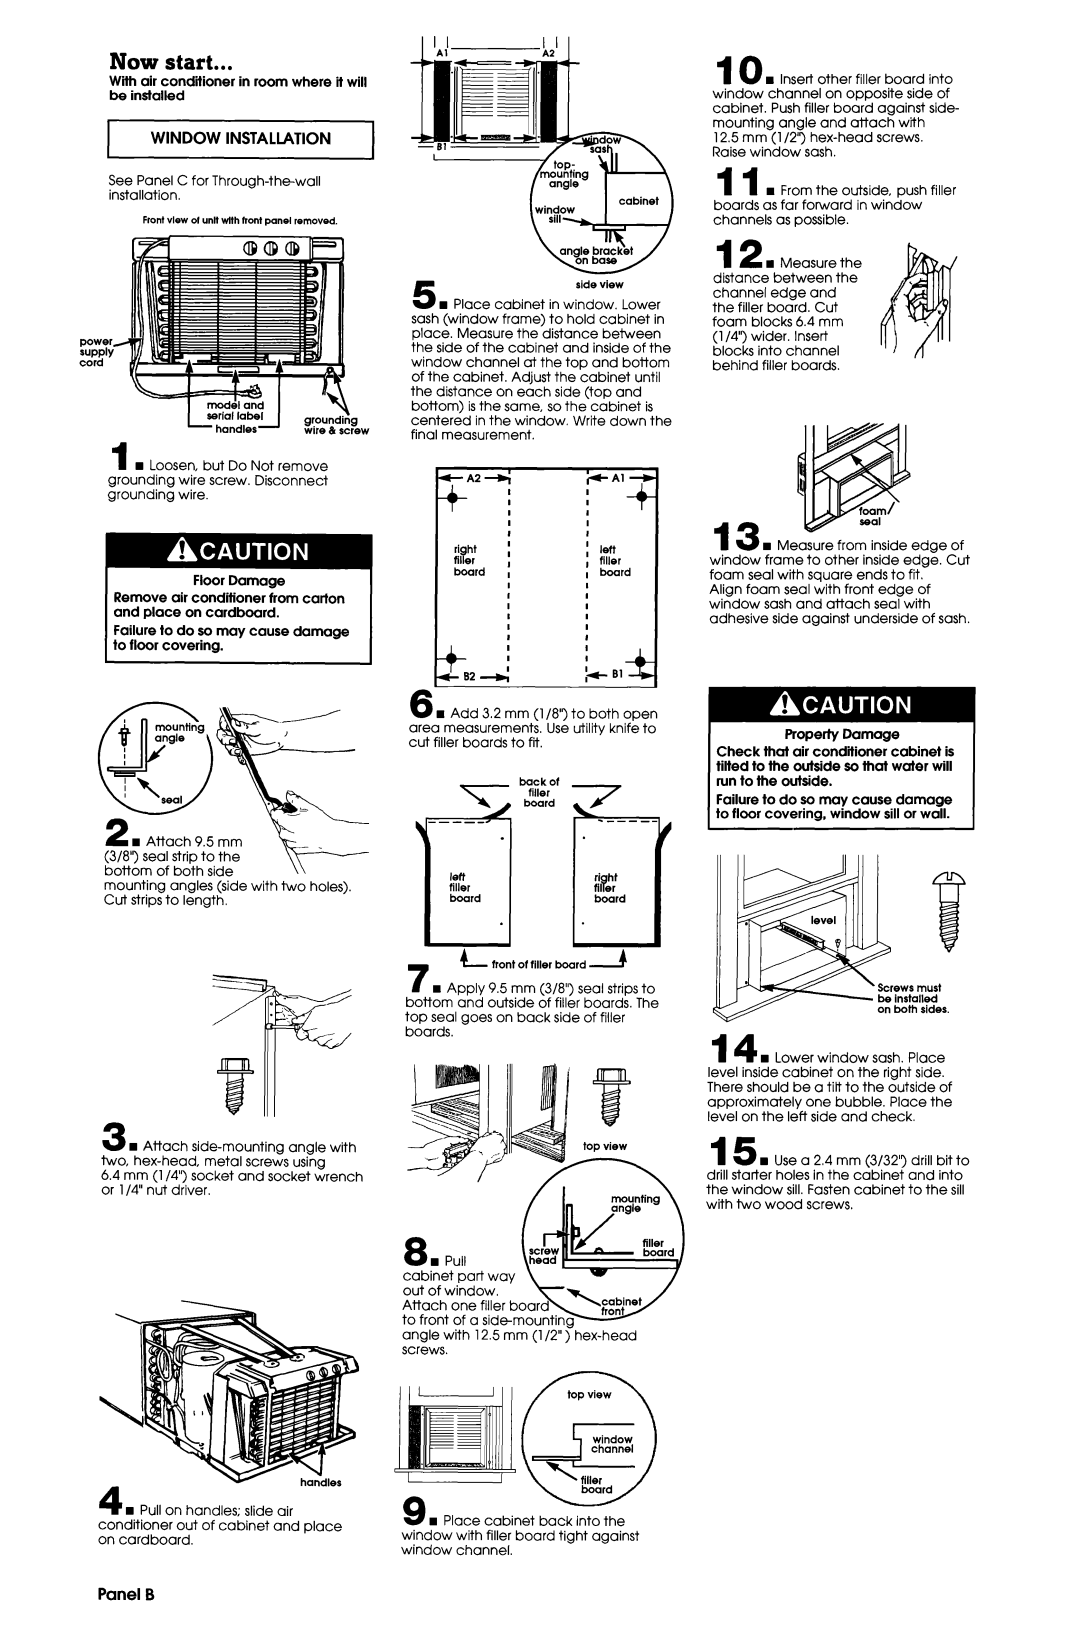 Whirlpool 1166073 installation instructions Now start, Window Installation, Panel B 